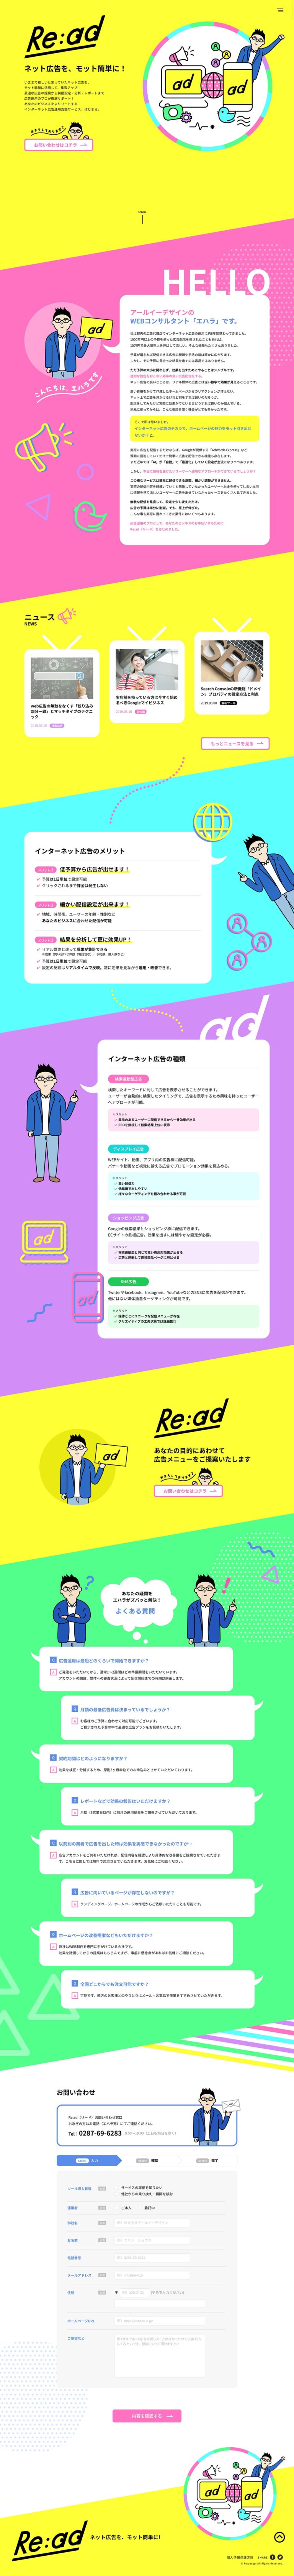 Re:ad｜インターネット広告運用支援サービス